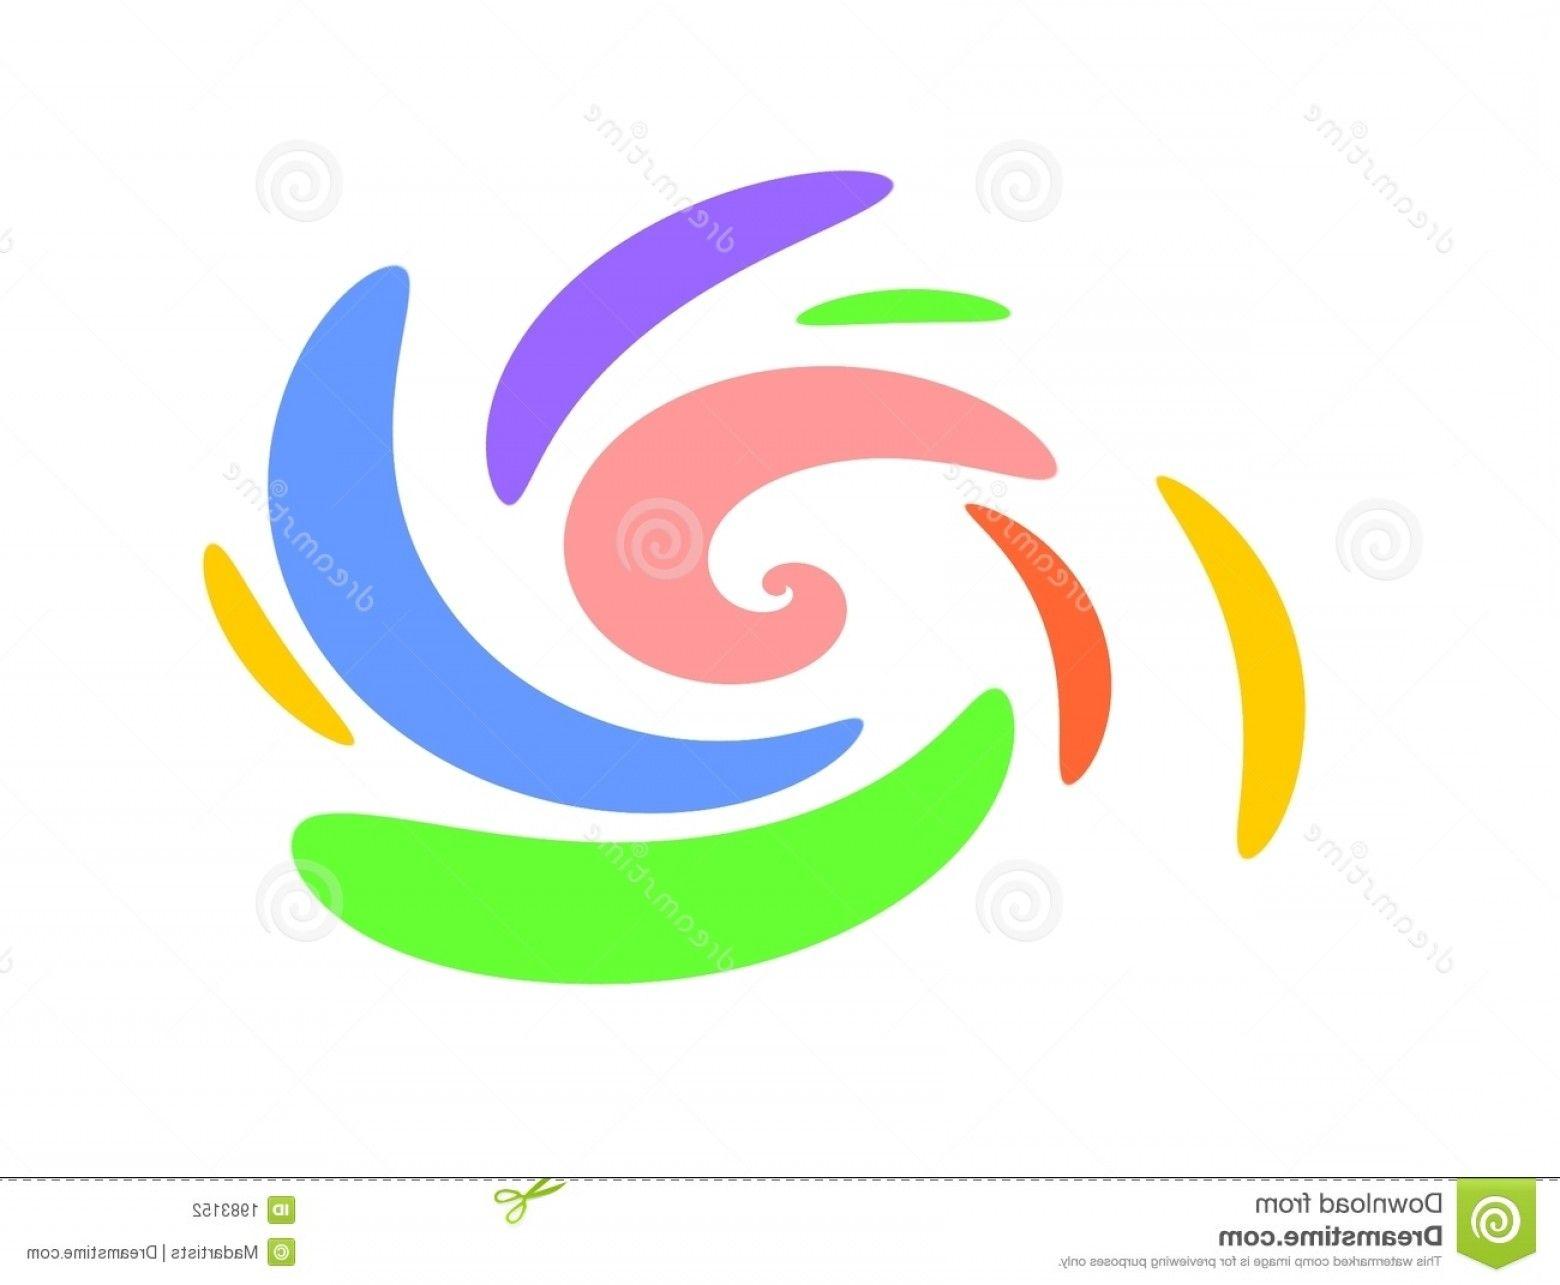 Oval Swirl Logo - Stock Photography Swirls Oval Swoosh Shapes Image | SOIDERGI